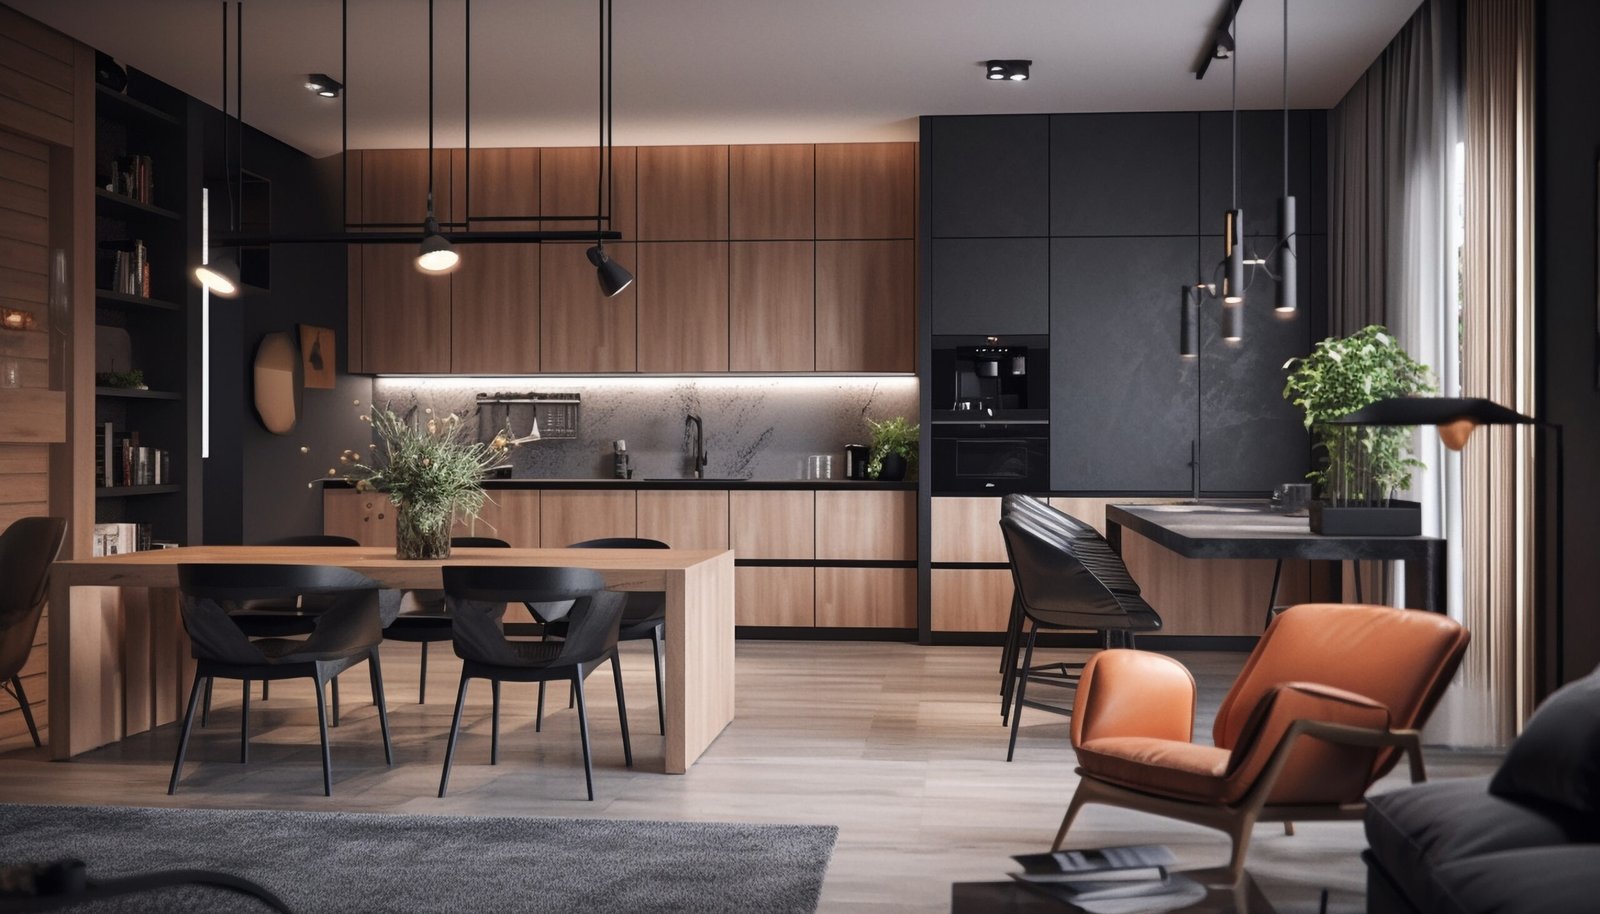 Luxury domestic kitchen with elegant wooden design.